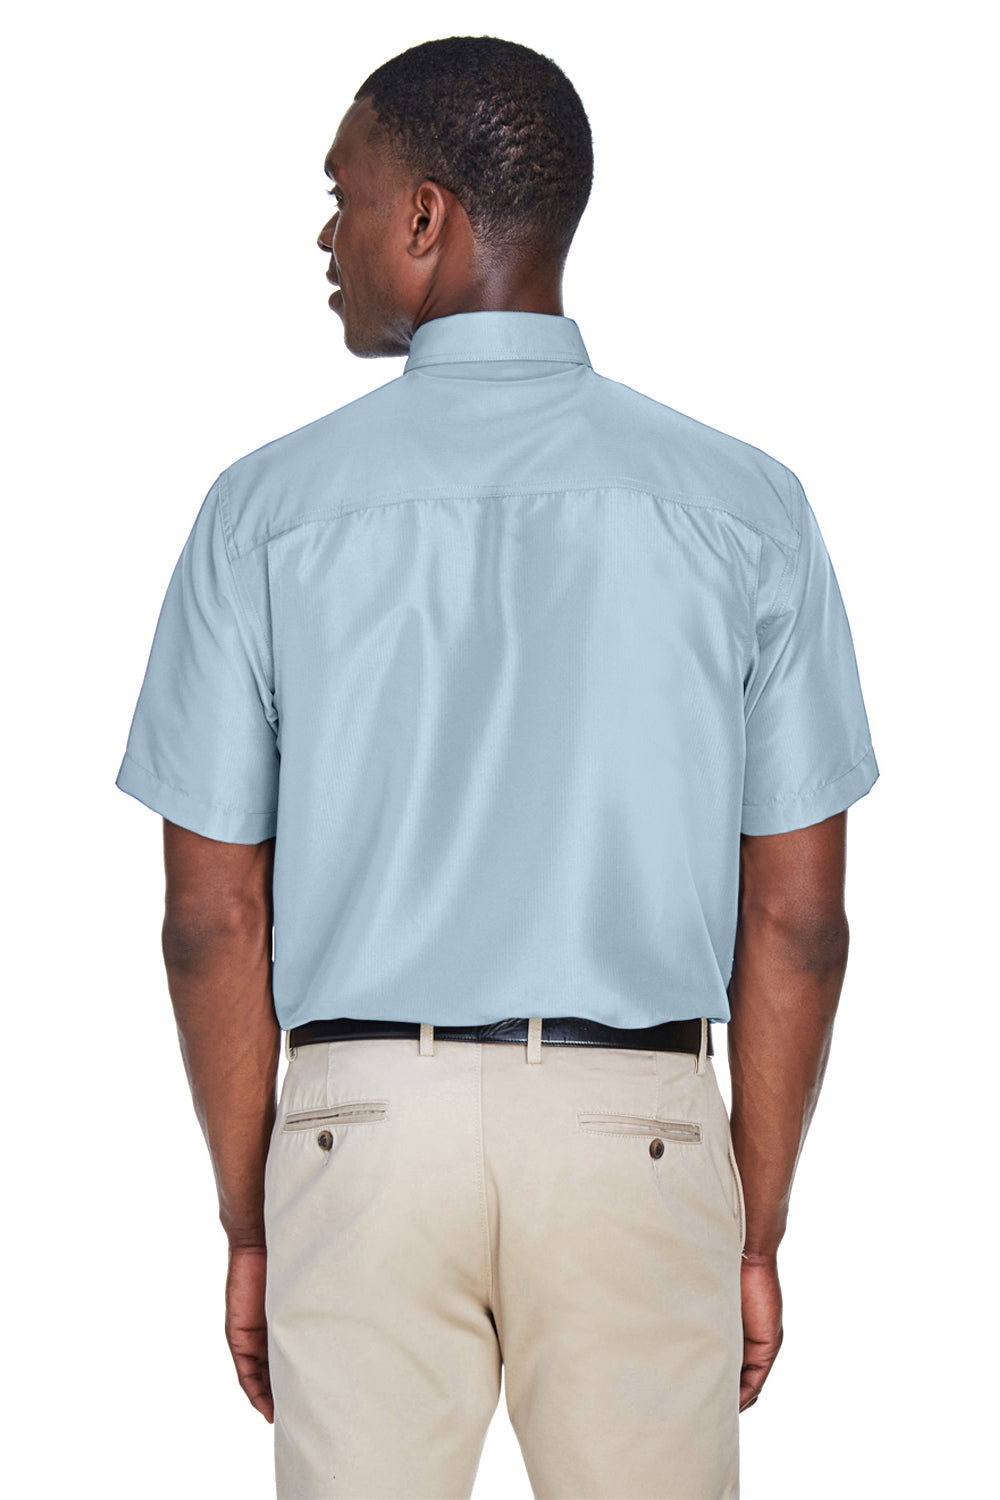 Harriton M580 Mens Key West Performance Short Sleeve Button Down Shirt w/ Double Pockets Cloud Blue Back